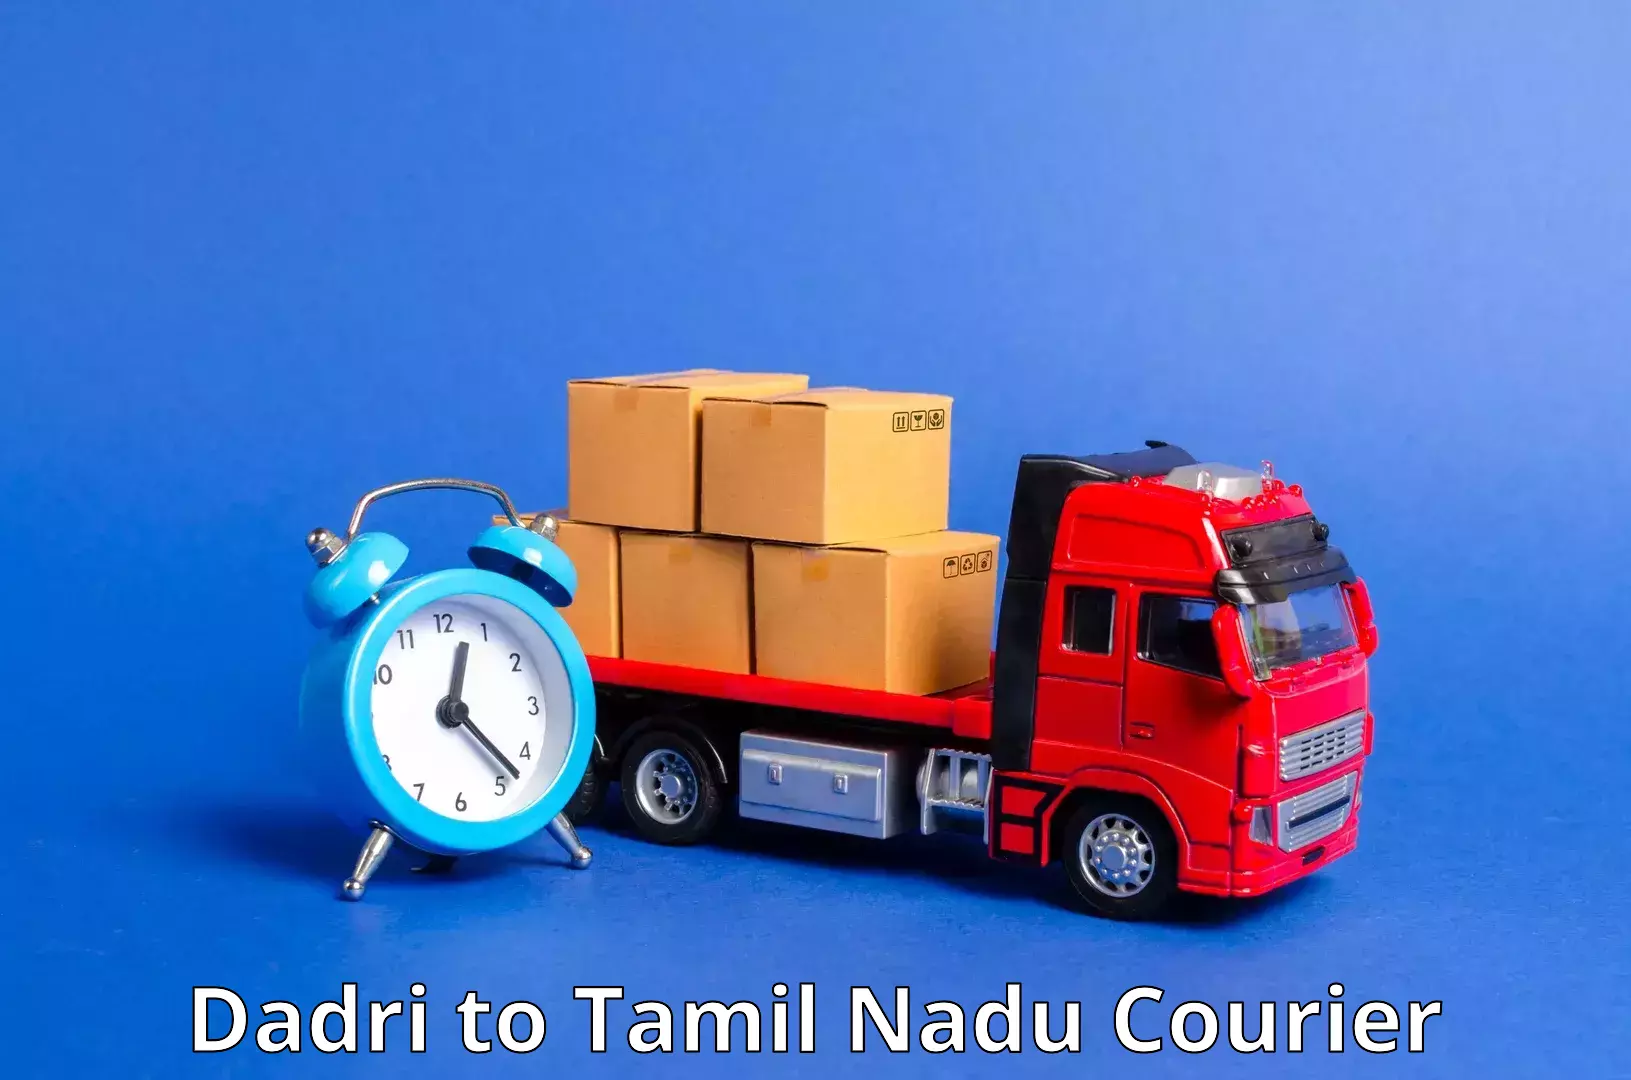 Courier app Dadri to Periyakulam